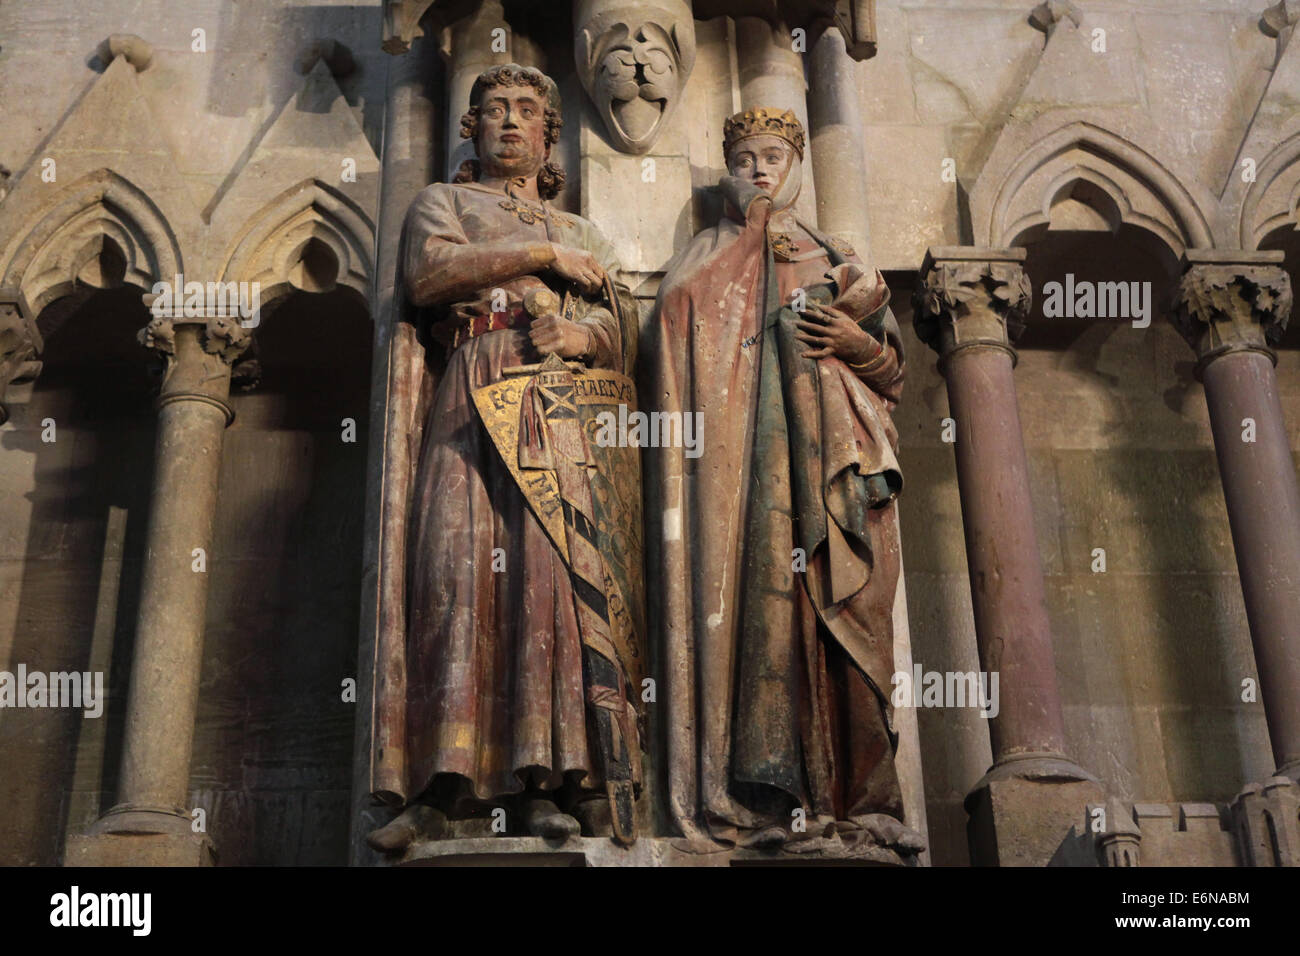 Estatuas góticas de Margrave Eckard II y su esposa, Uta en Naumburg Catedral de Naumburg, Sajonia-Anhalt, Alemania. Foto de stock